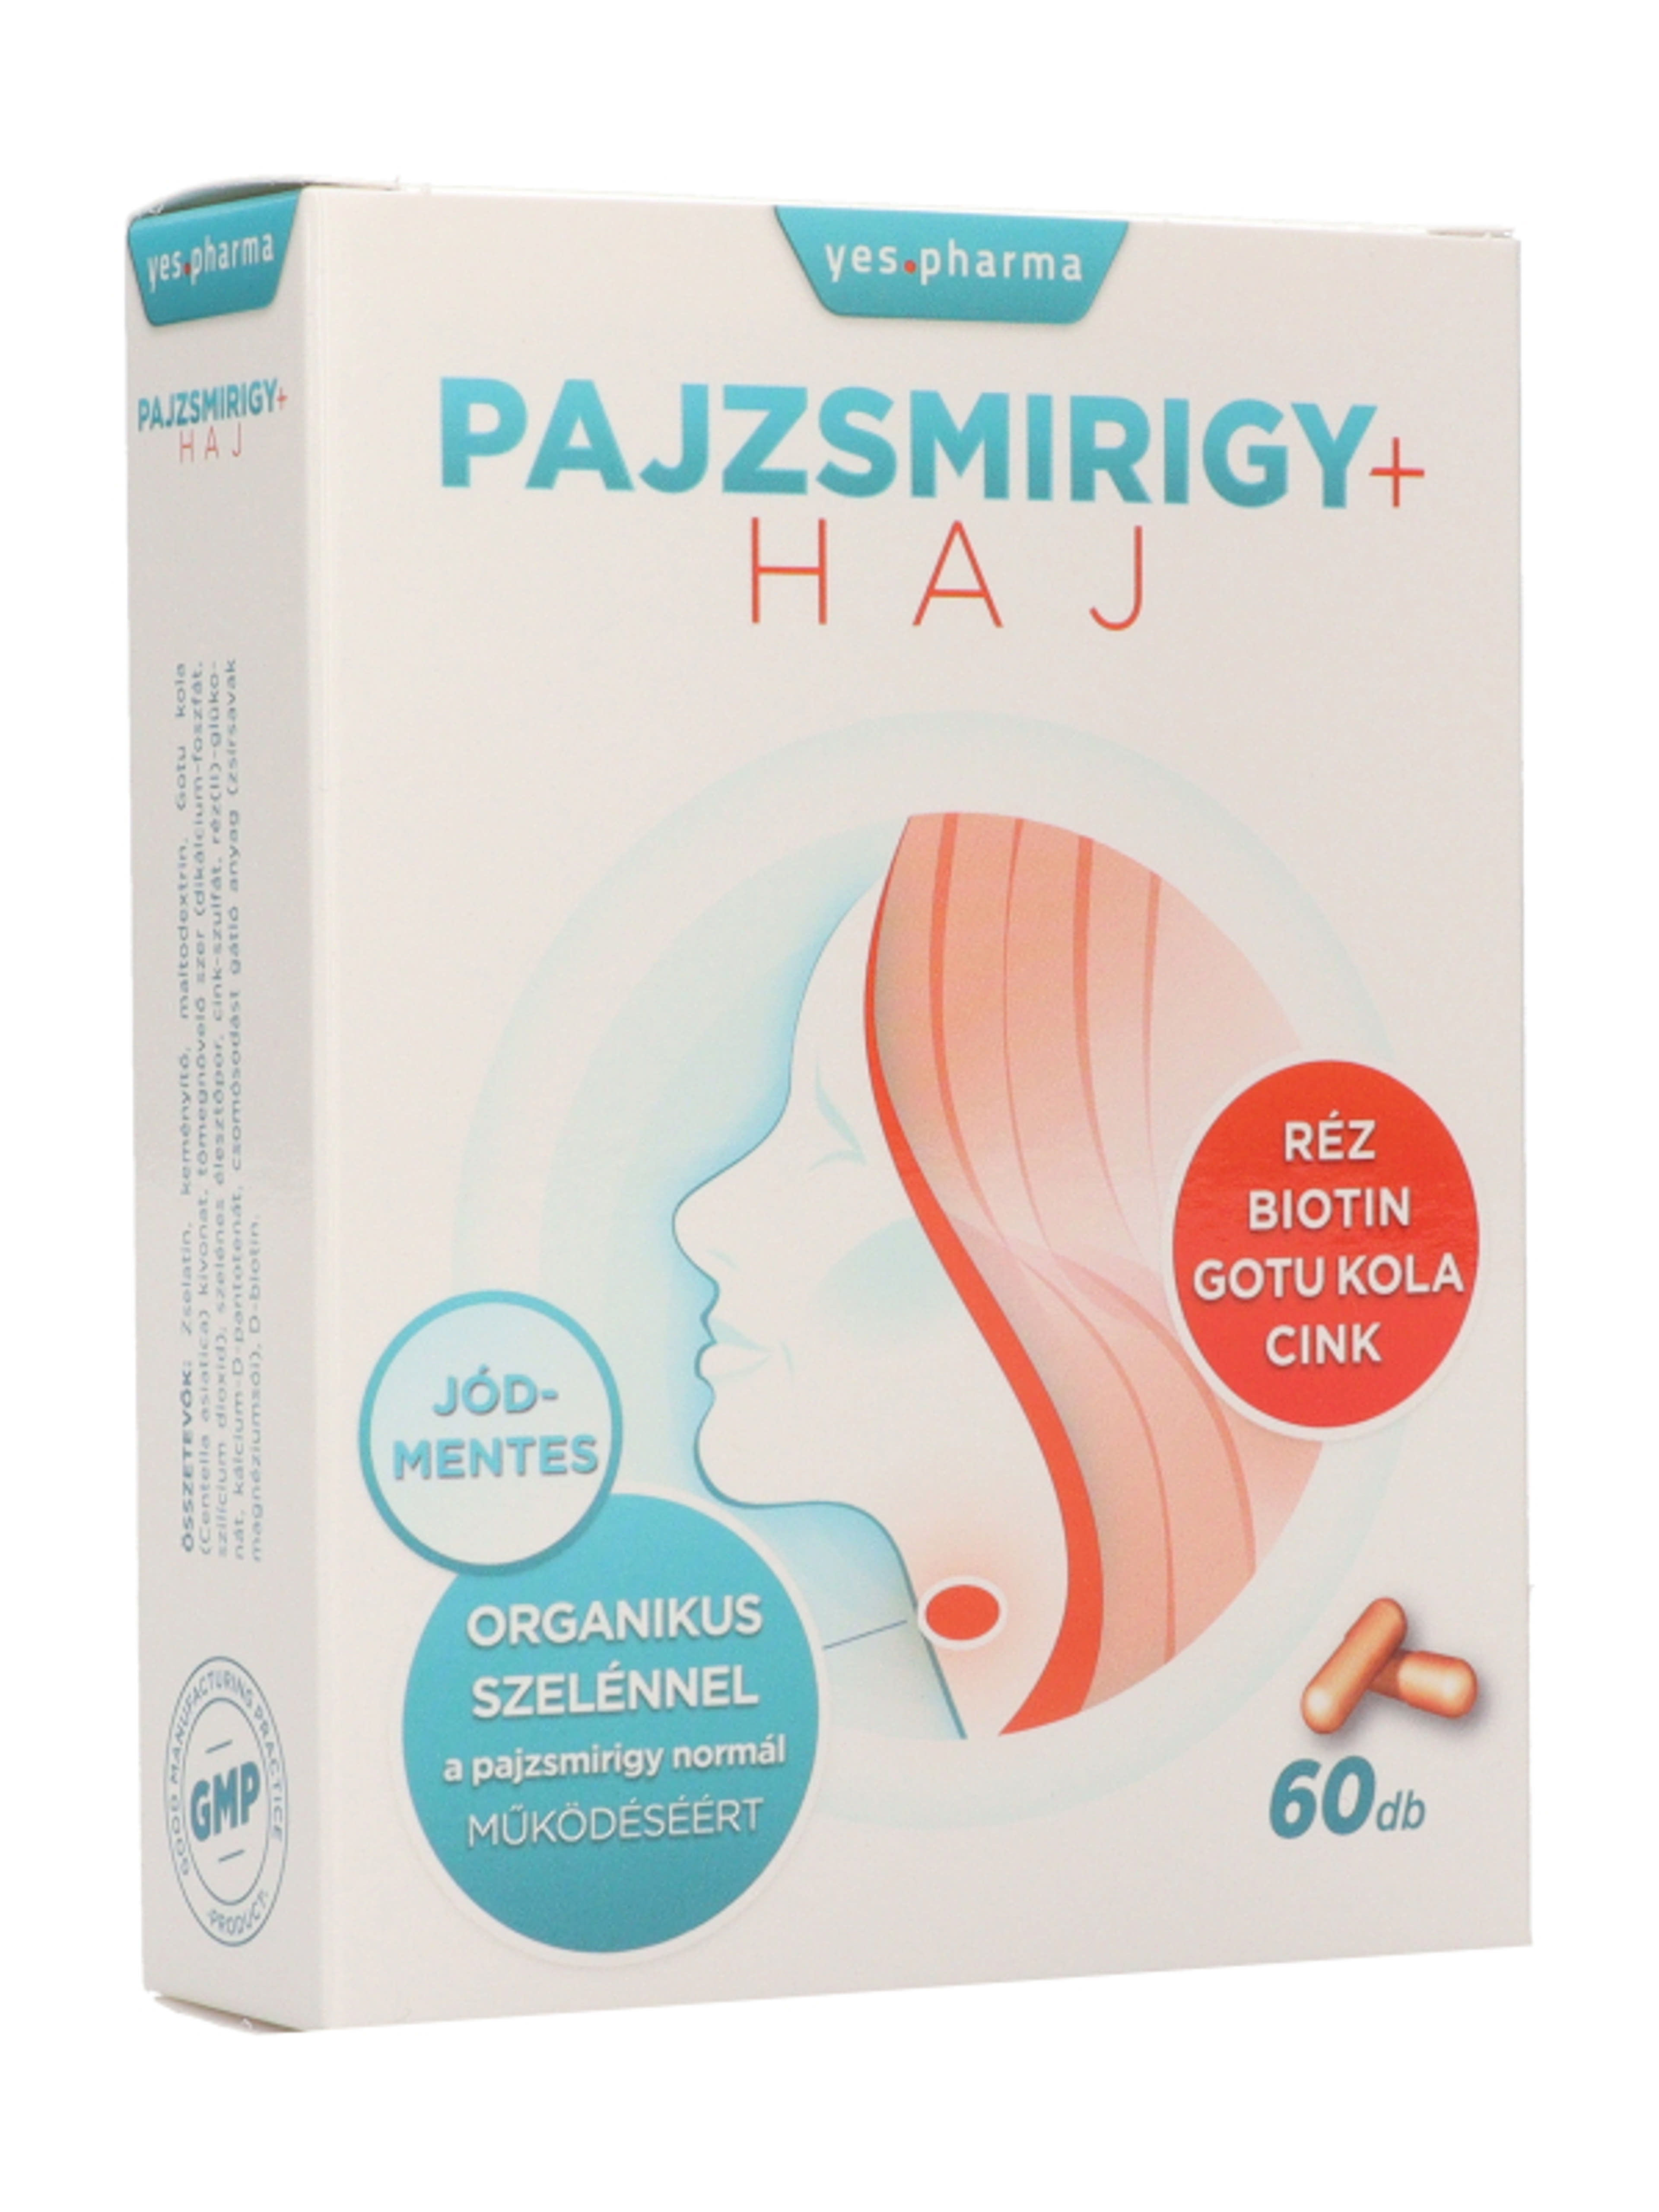 Yes Pharma Pajzsmirigy+ Haj Kapszula - 60 db-5